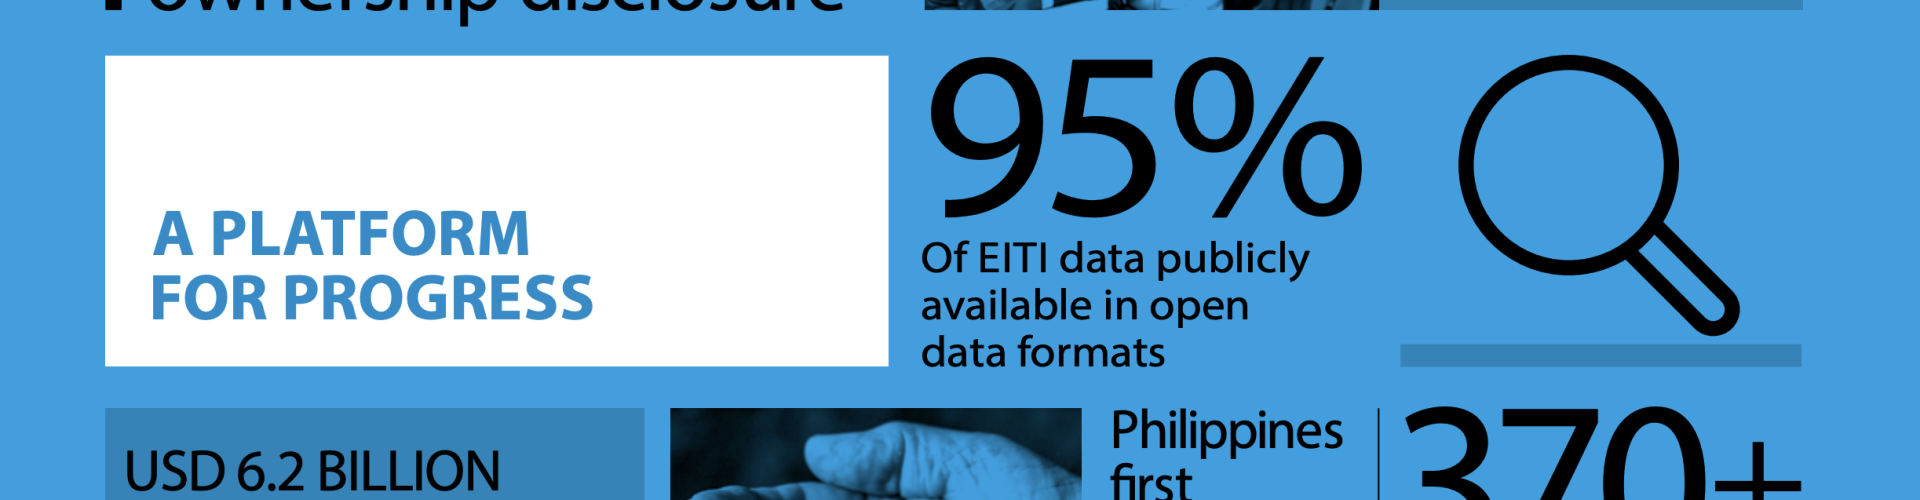 EITI Progress Report 2018